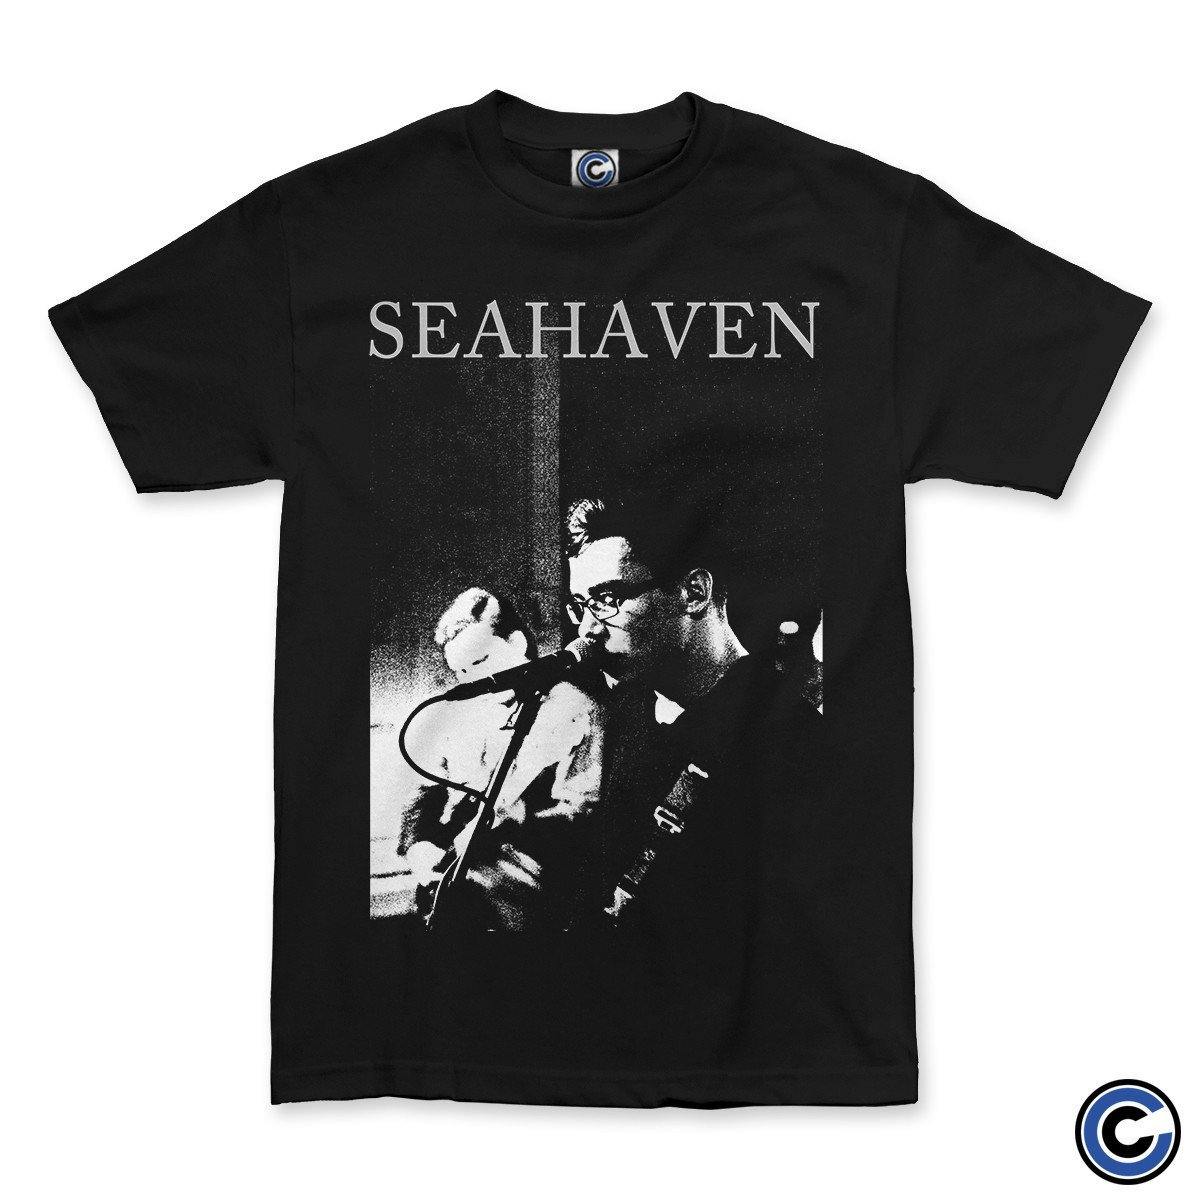 Buy – Seahaven "Live" Shirt – Band & Music Merch – Cold Cuts Merch